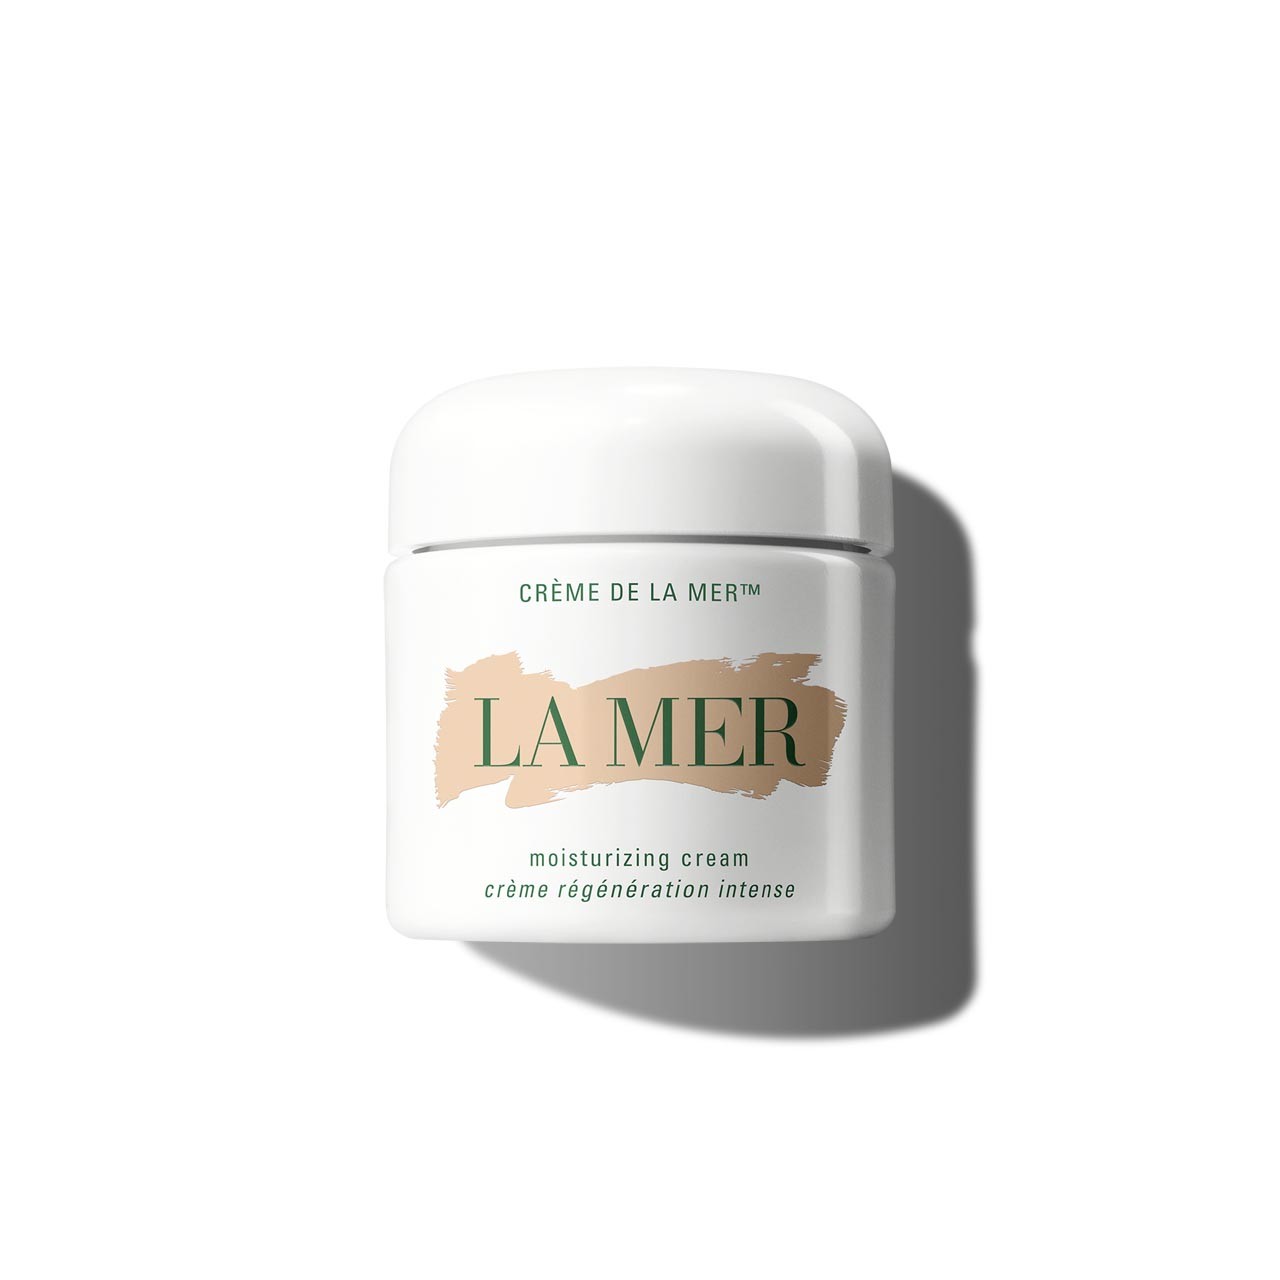 La Mer - Creme De La Mer Limited Edition - 